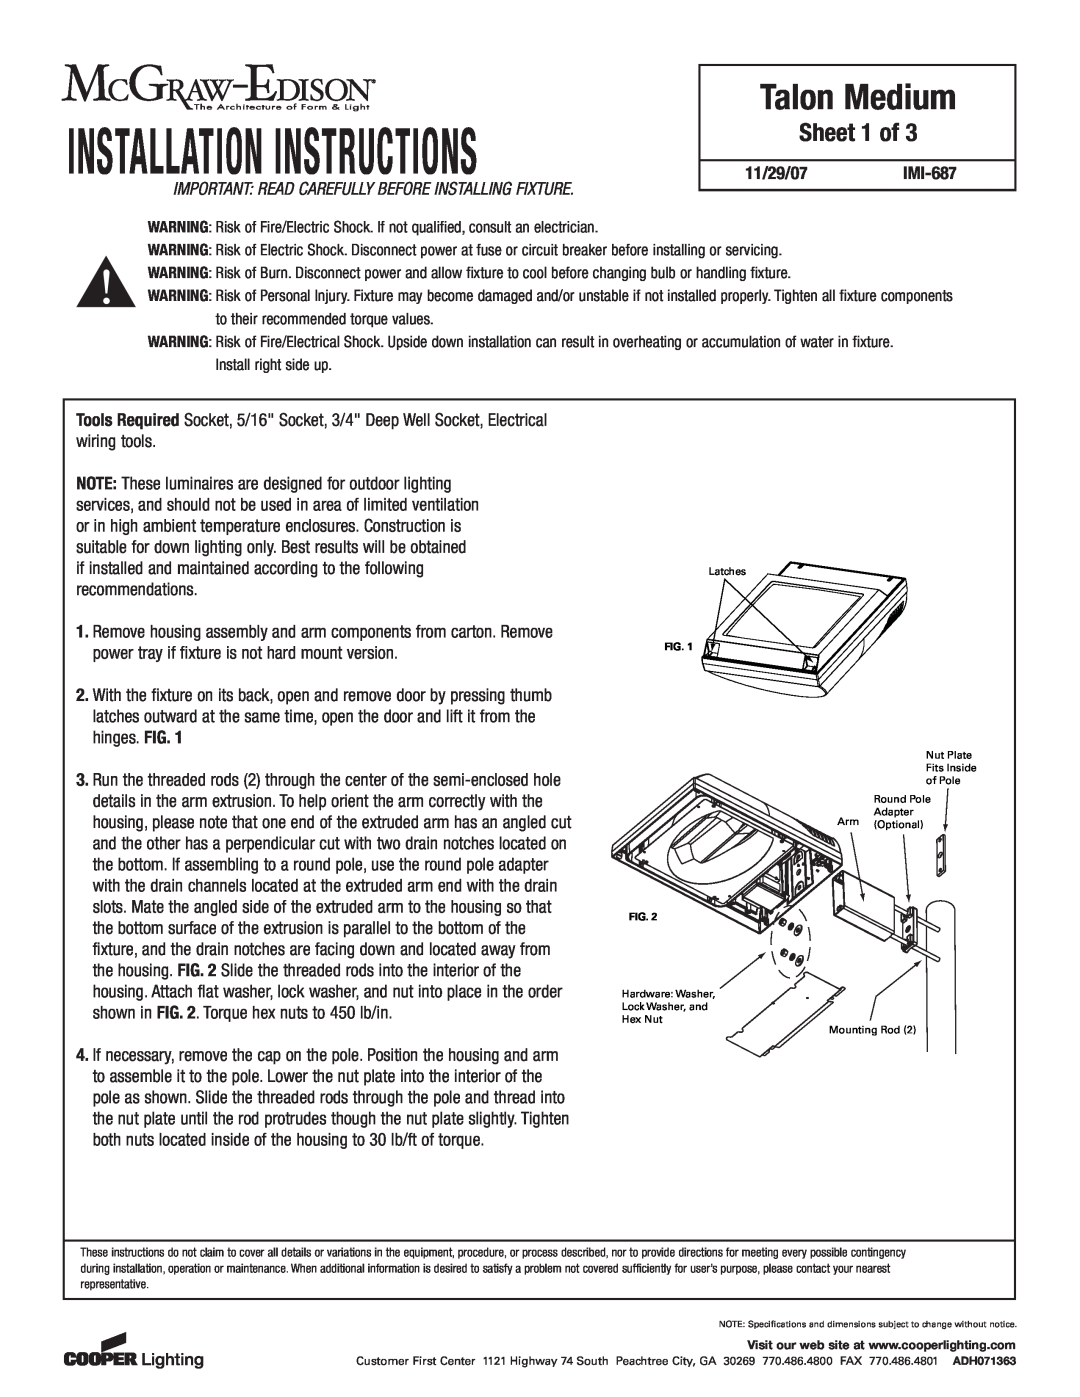 Cooper Lighting IMI-687 installation instructions Installation Instructions, Talon Medium, Sheet 1 of 